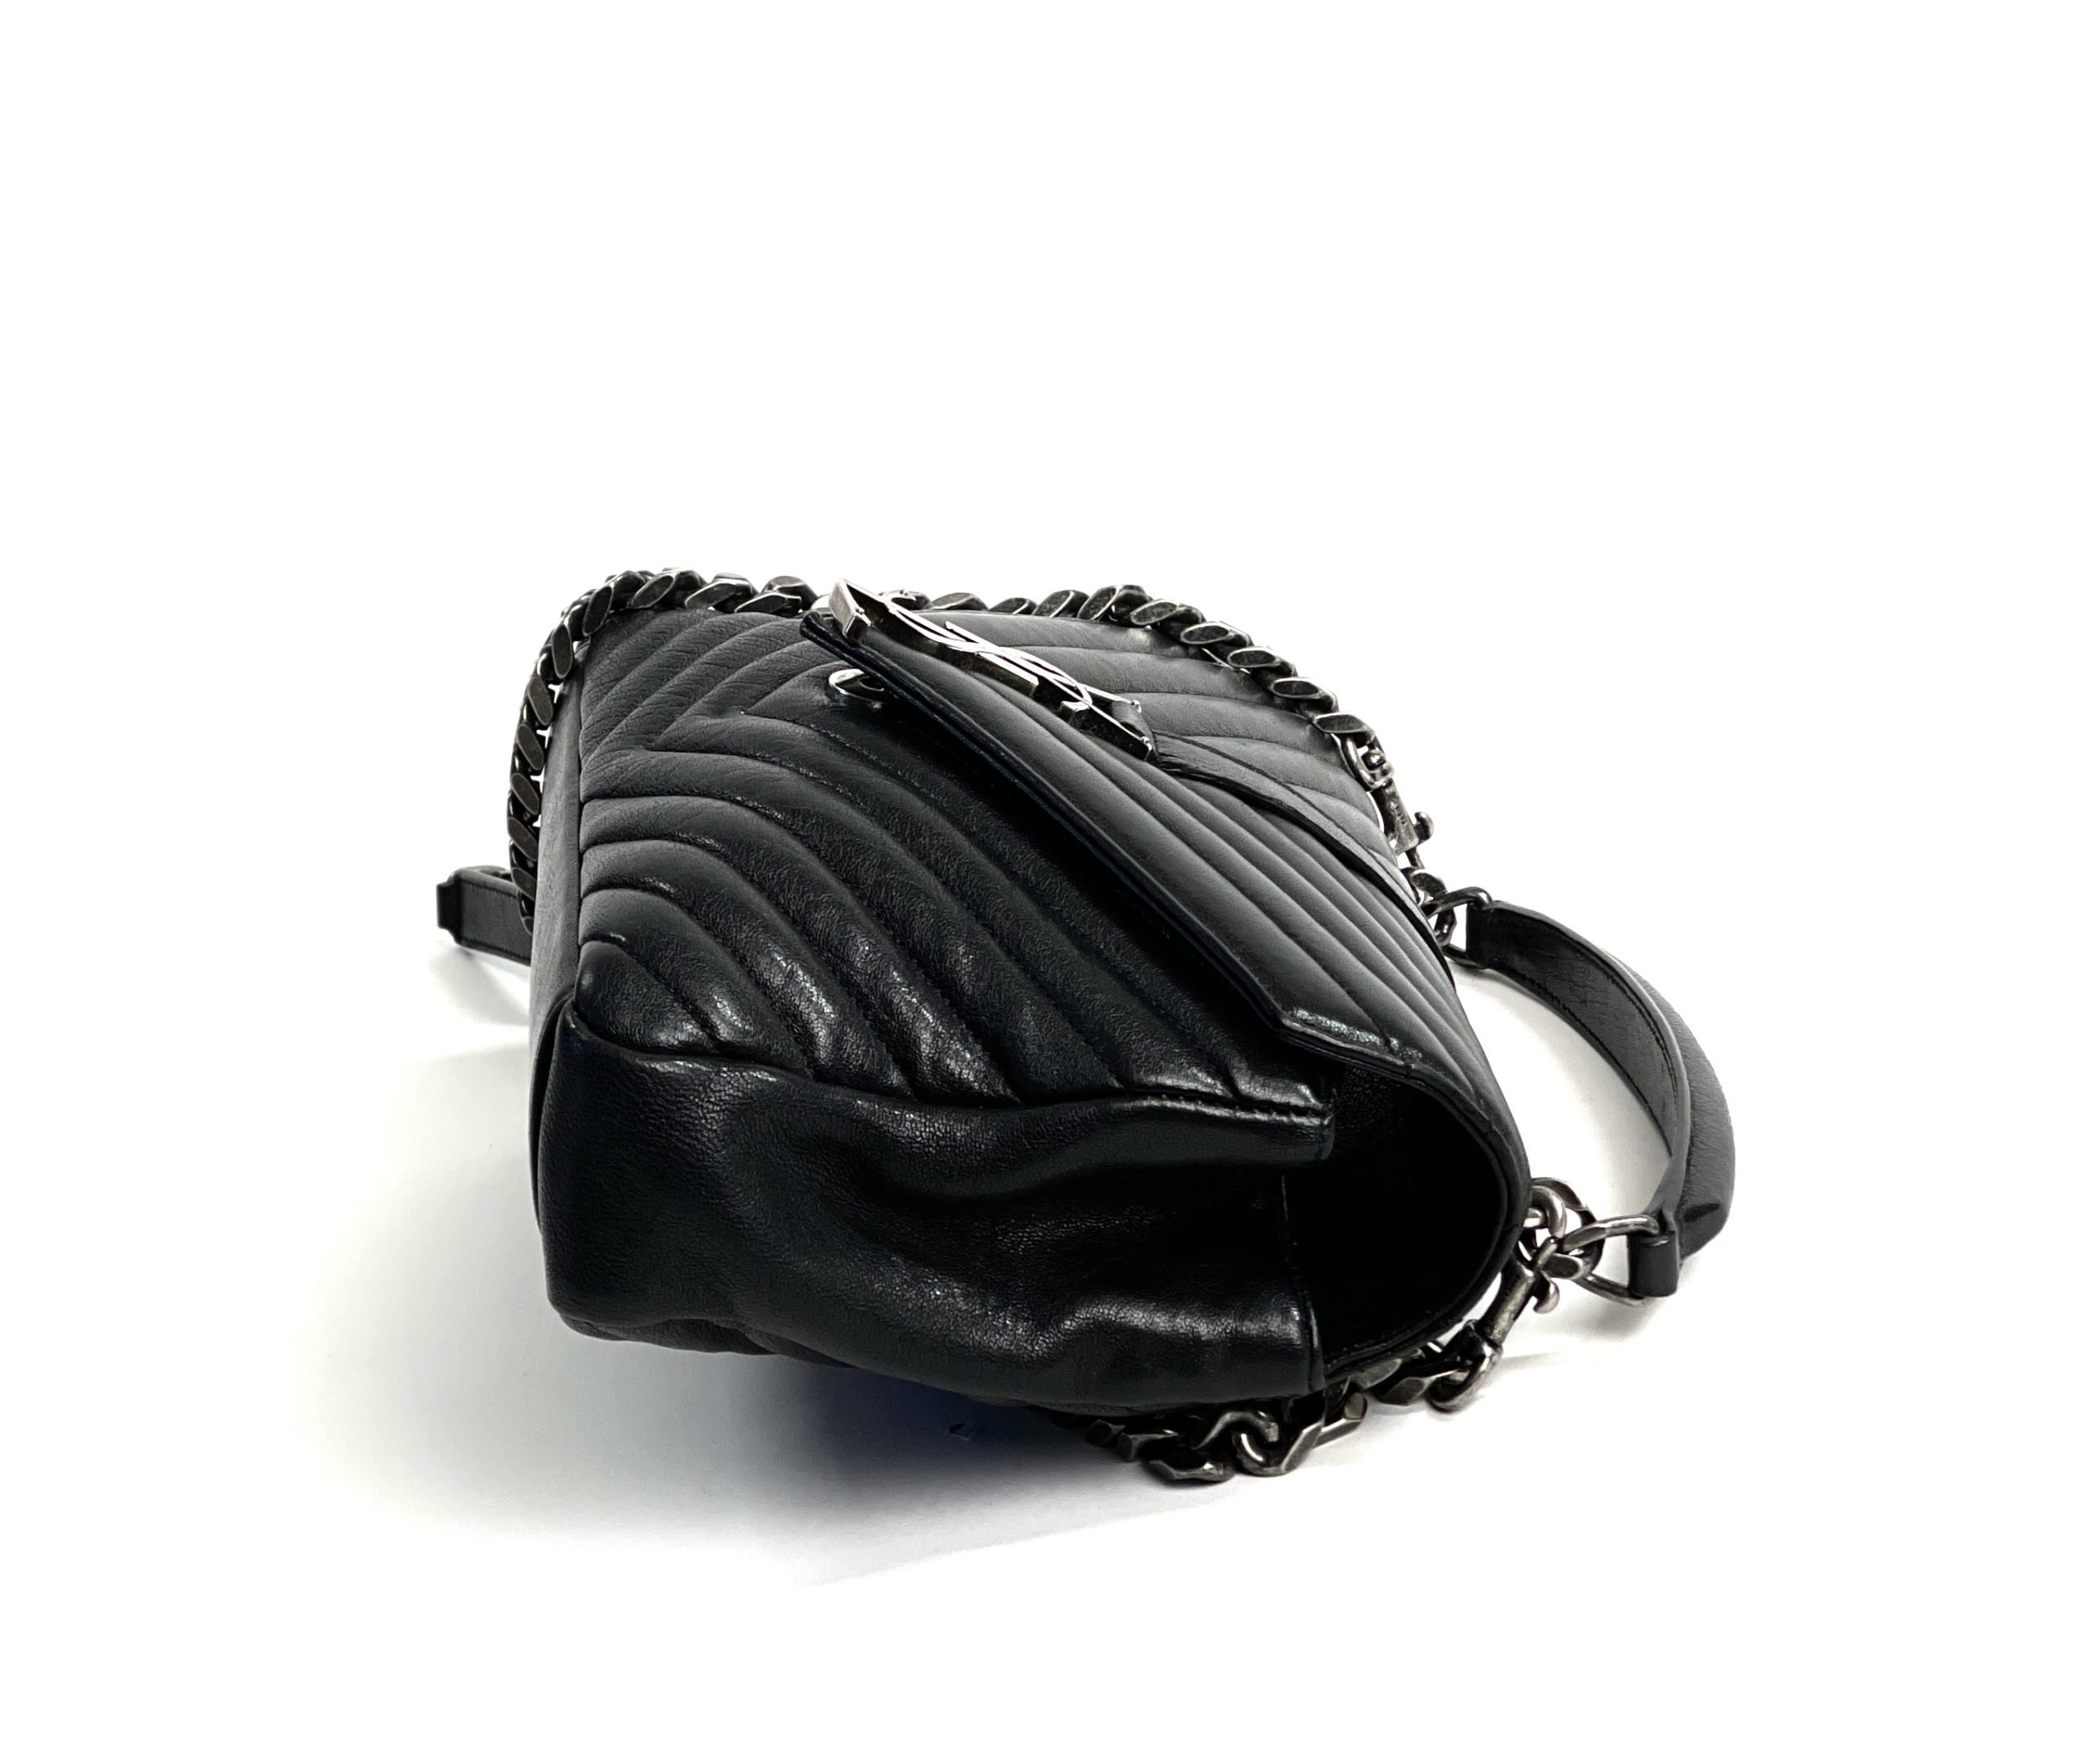 Chanel Large Surpique Bowler Bag - Black Handle Bags, Handbags